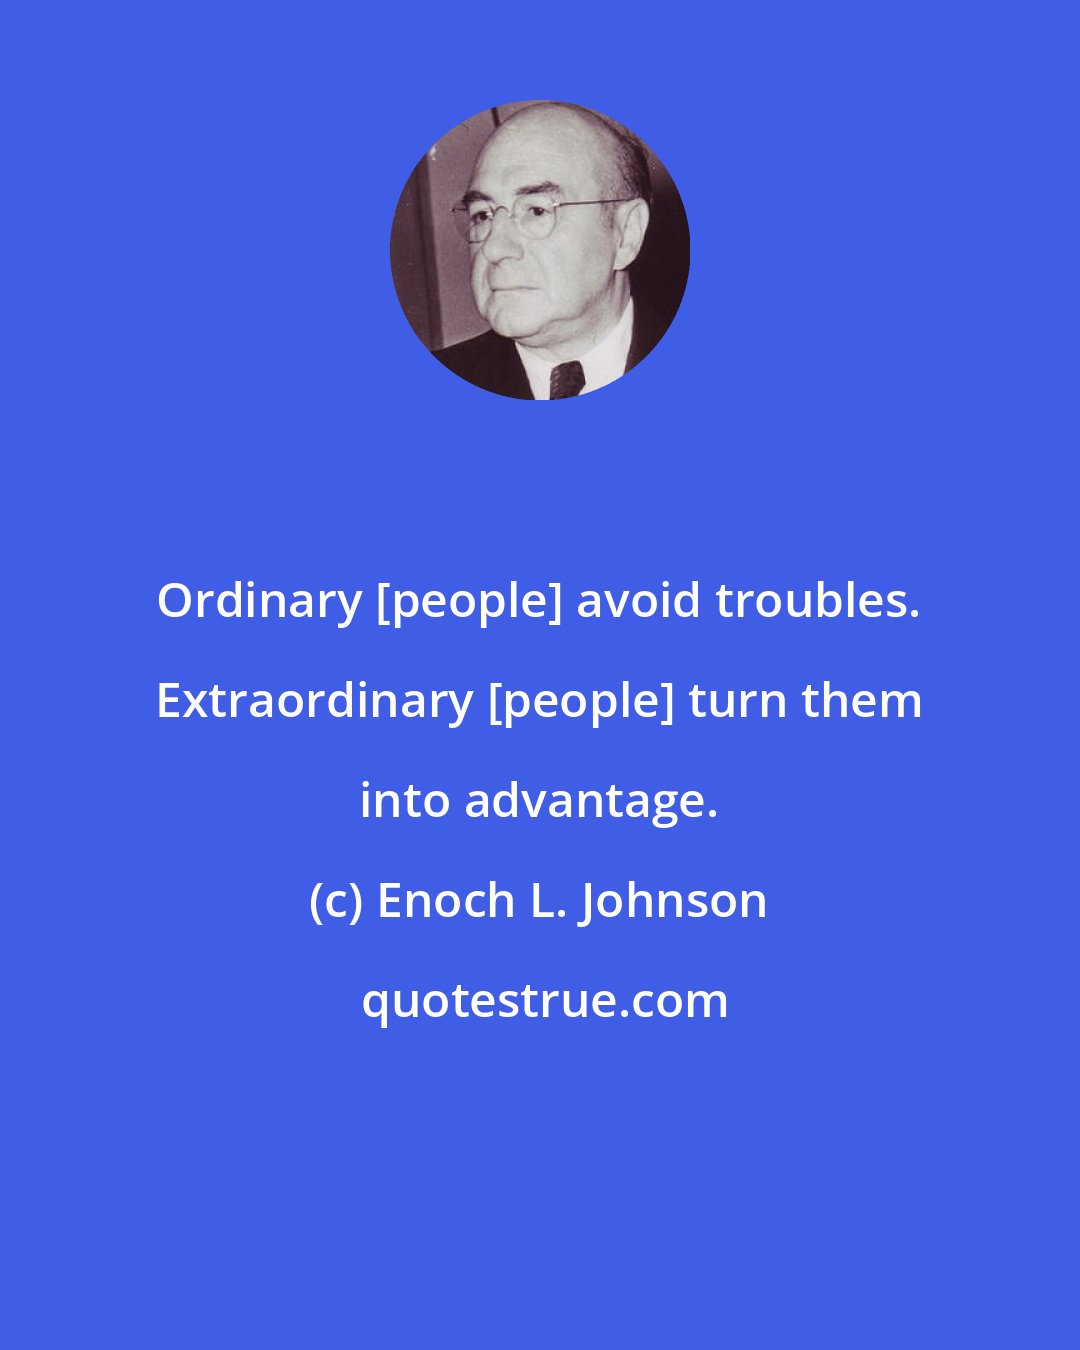 Enoch L. Johnson: Ordinary [people] avoid troubles. Extraordinary [people] turn them into advantage.